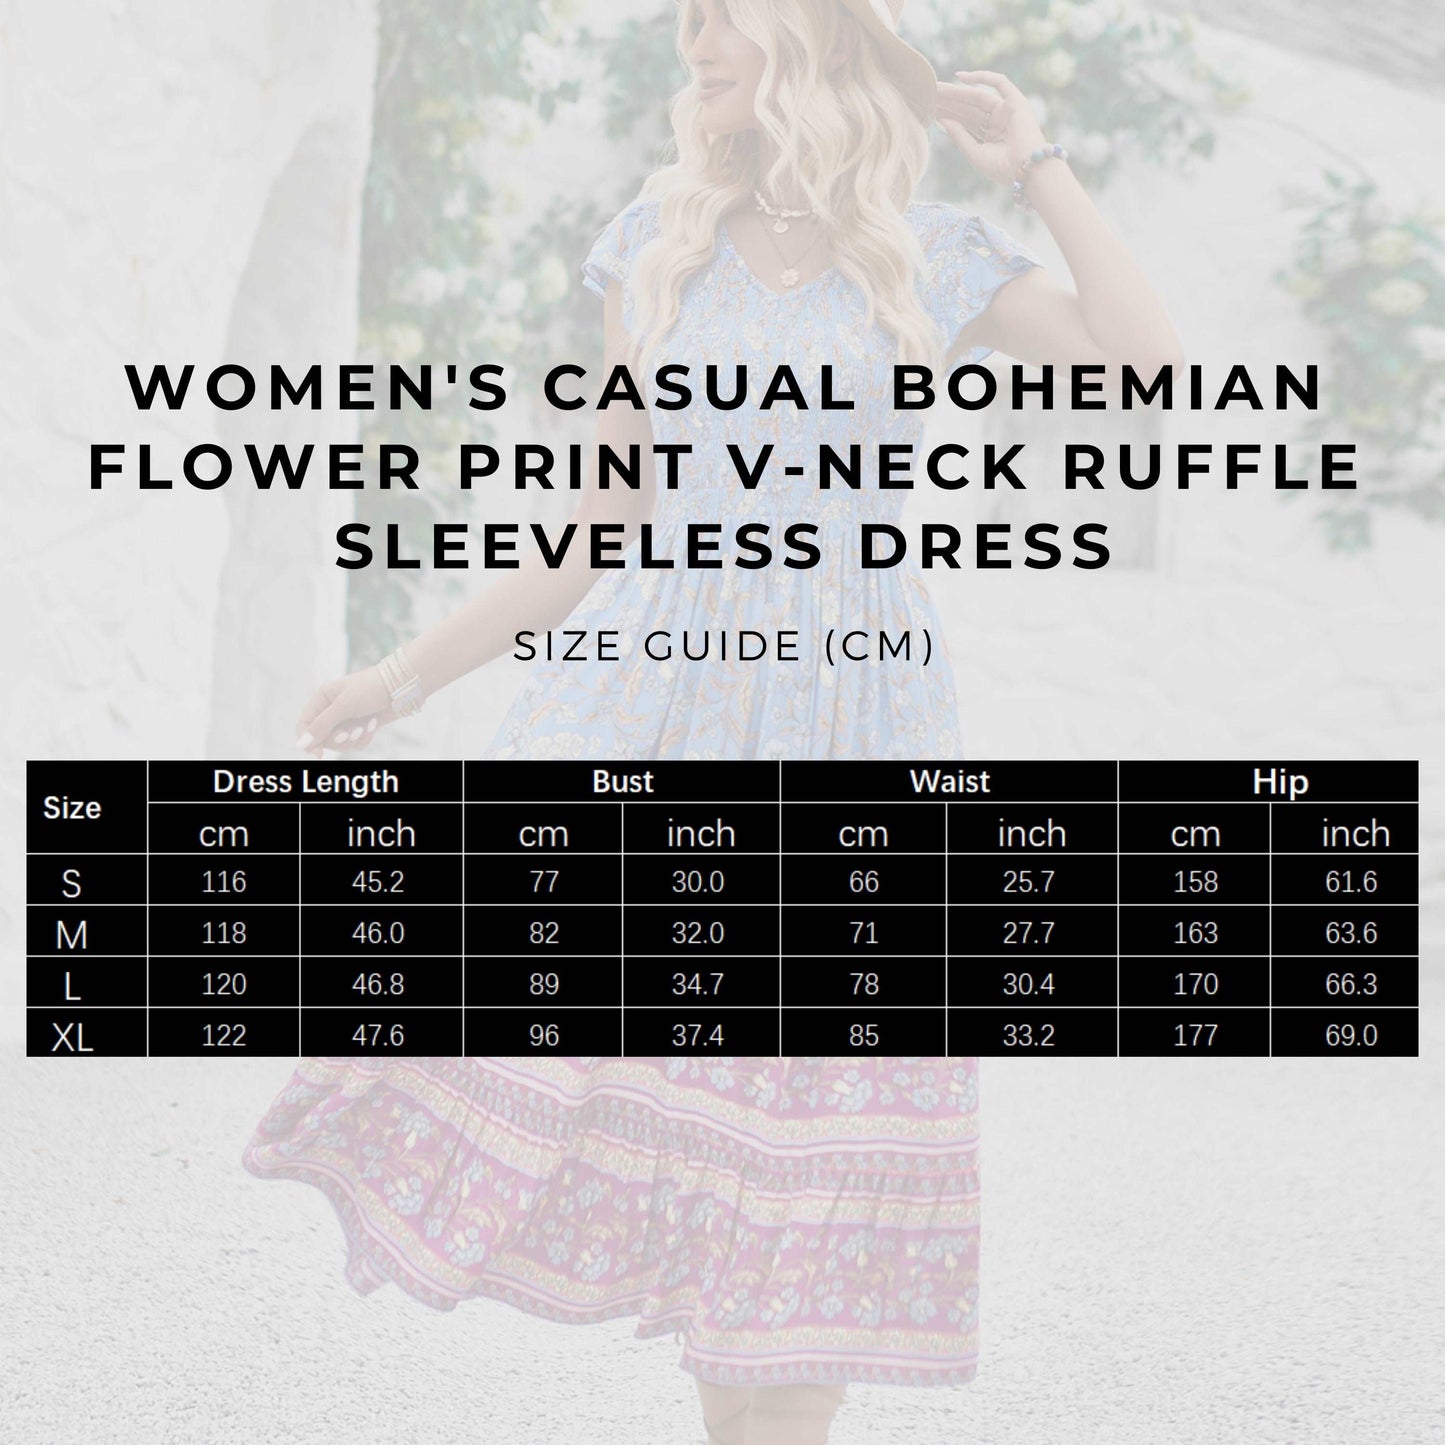 Women's Casual Bohemian Flower Print V-neck Ruffle Sleeveless Dress